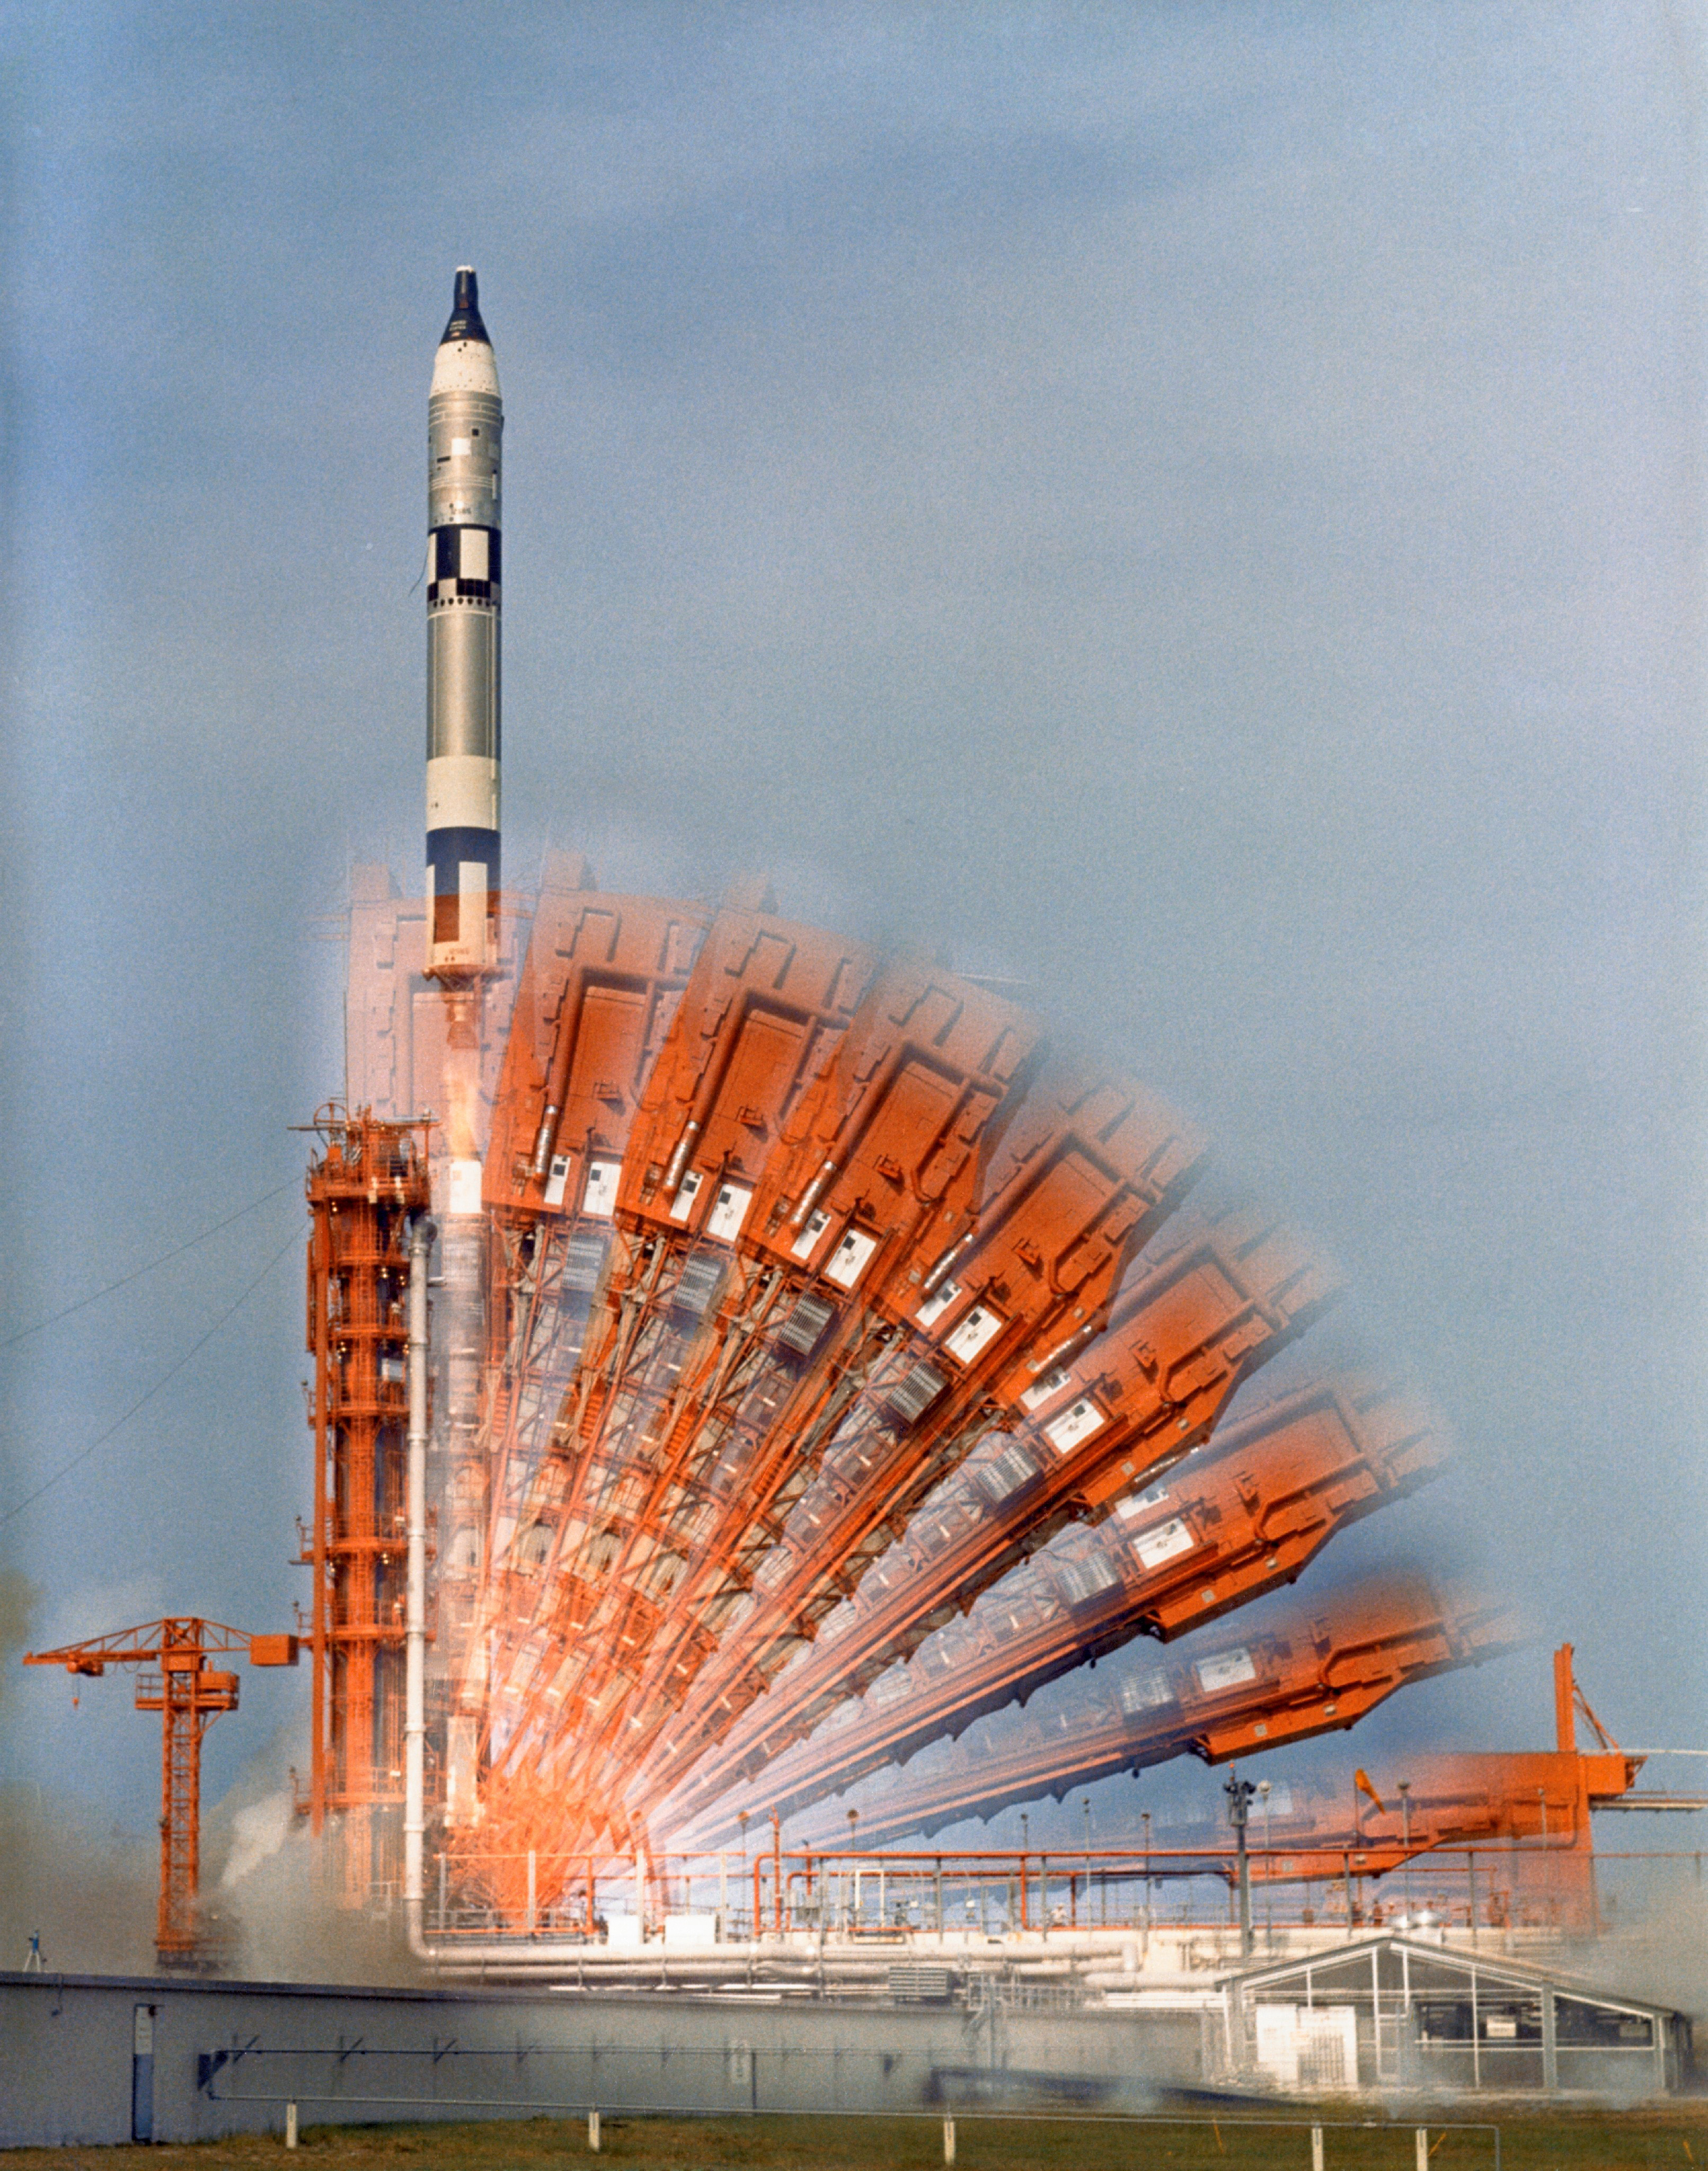 Gemini 10 launch time exposure - GPN-2006-000036